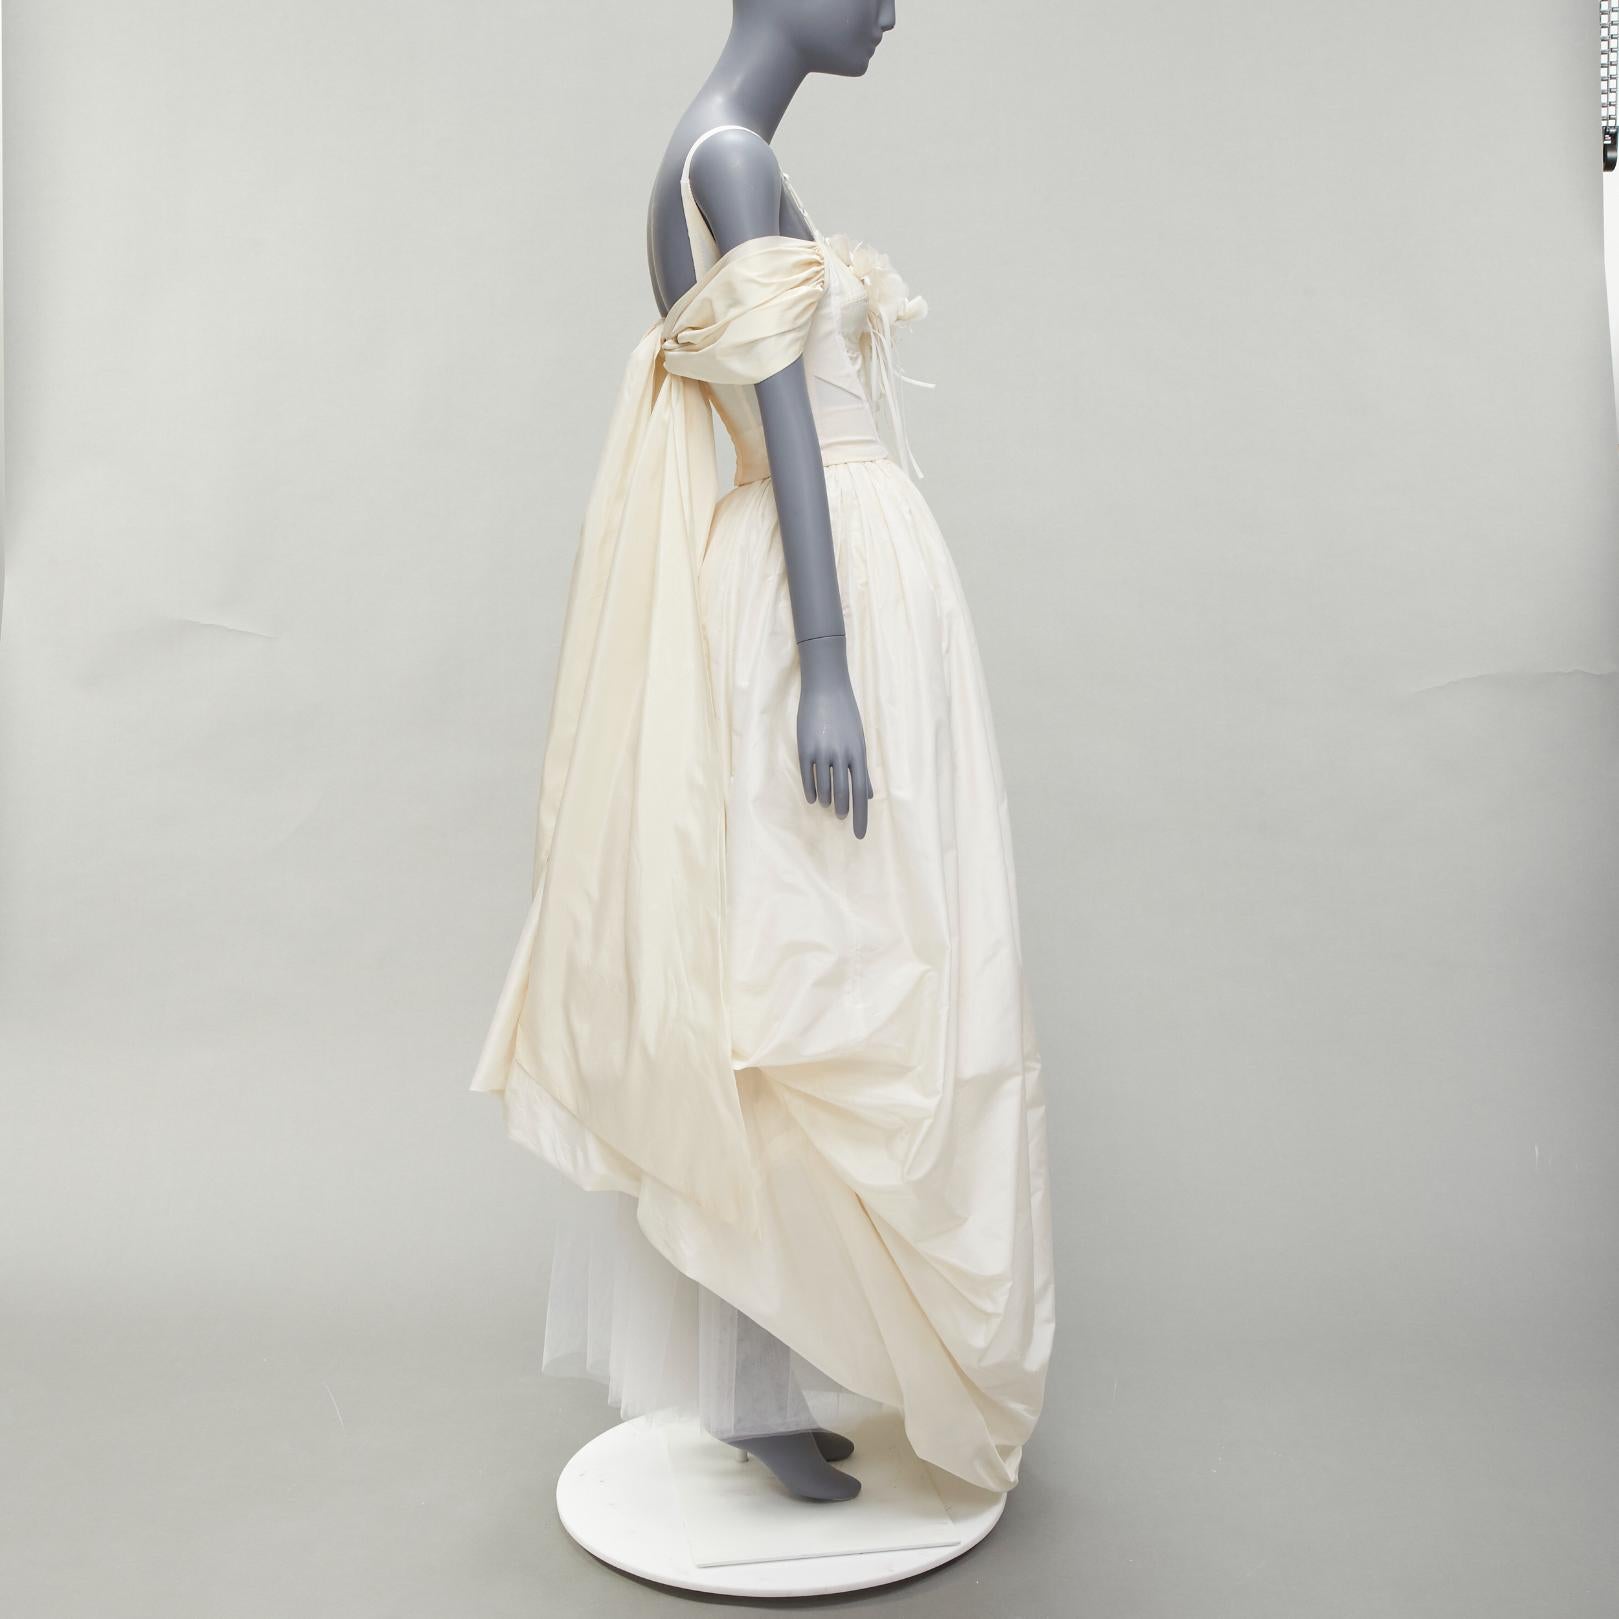 Gray DOLCE GABBANA 1990s Vintage corset bustier tulle skirt 2 piece bridal dress IT38 For Sale